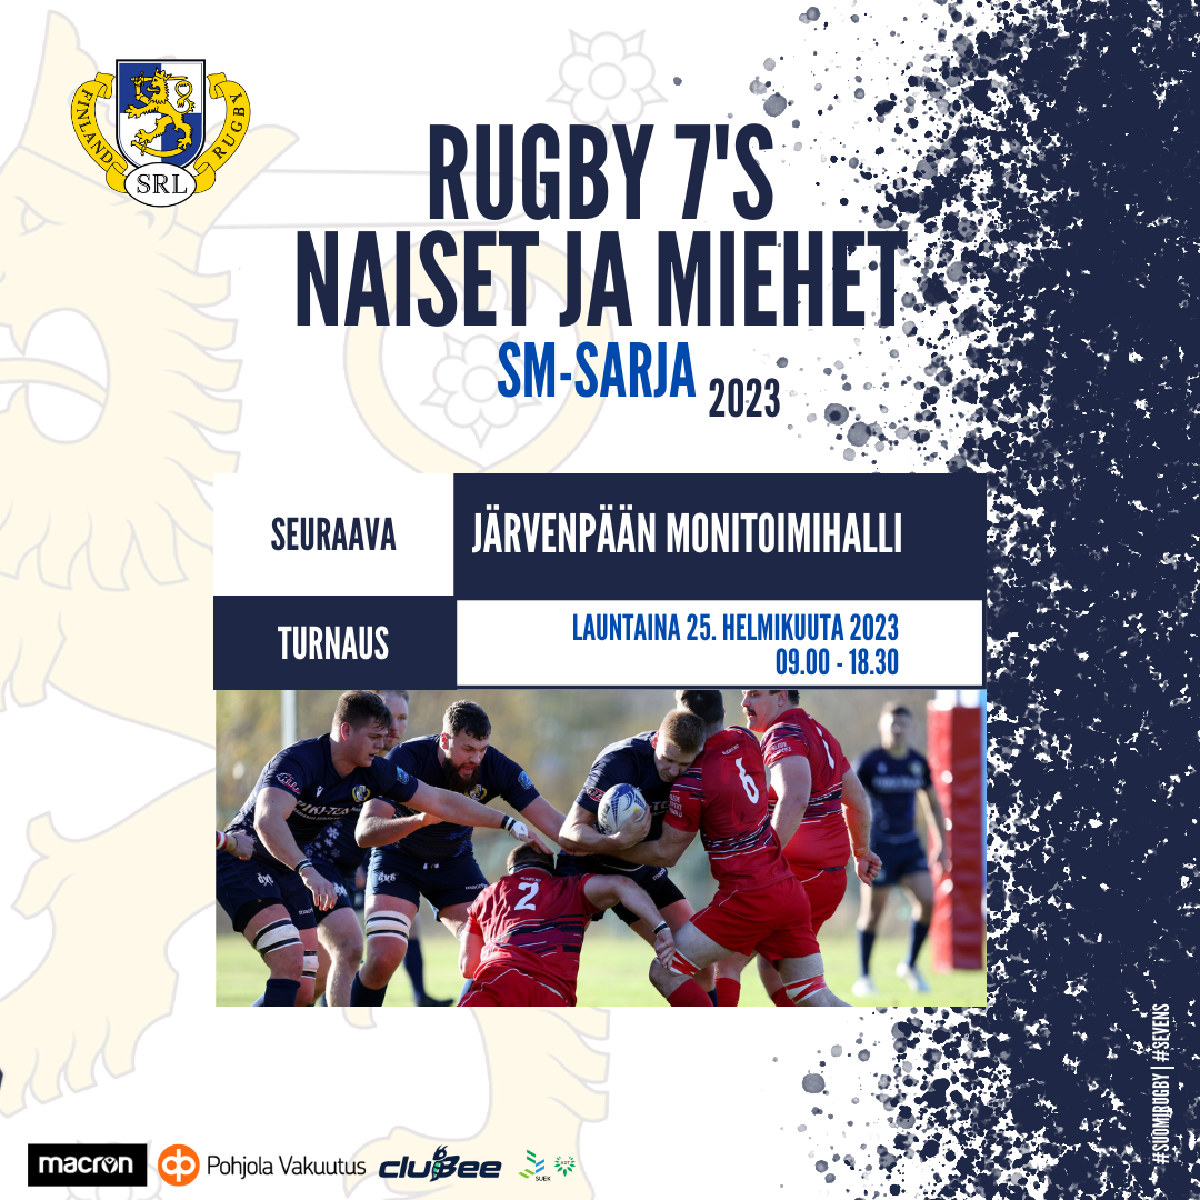 Rugby 7s SM-sarjat jatkuvat 25.2. Järvenpäässä